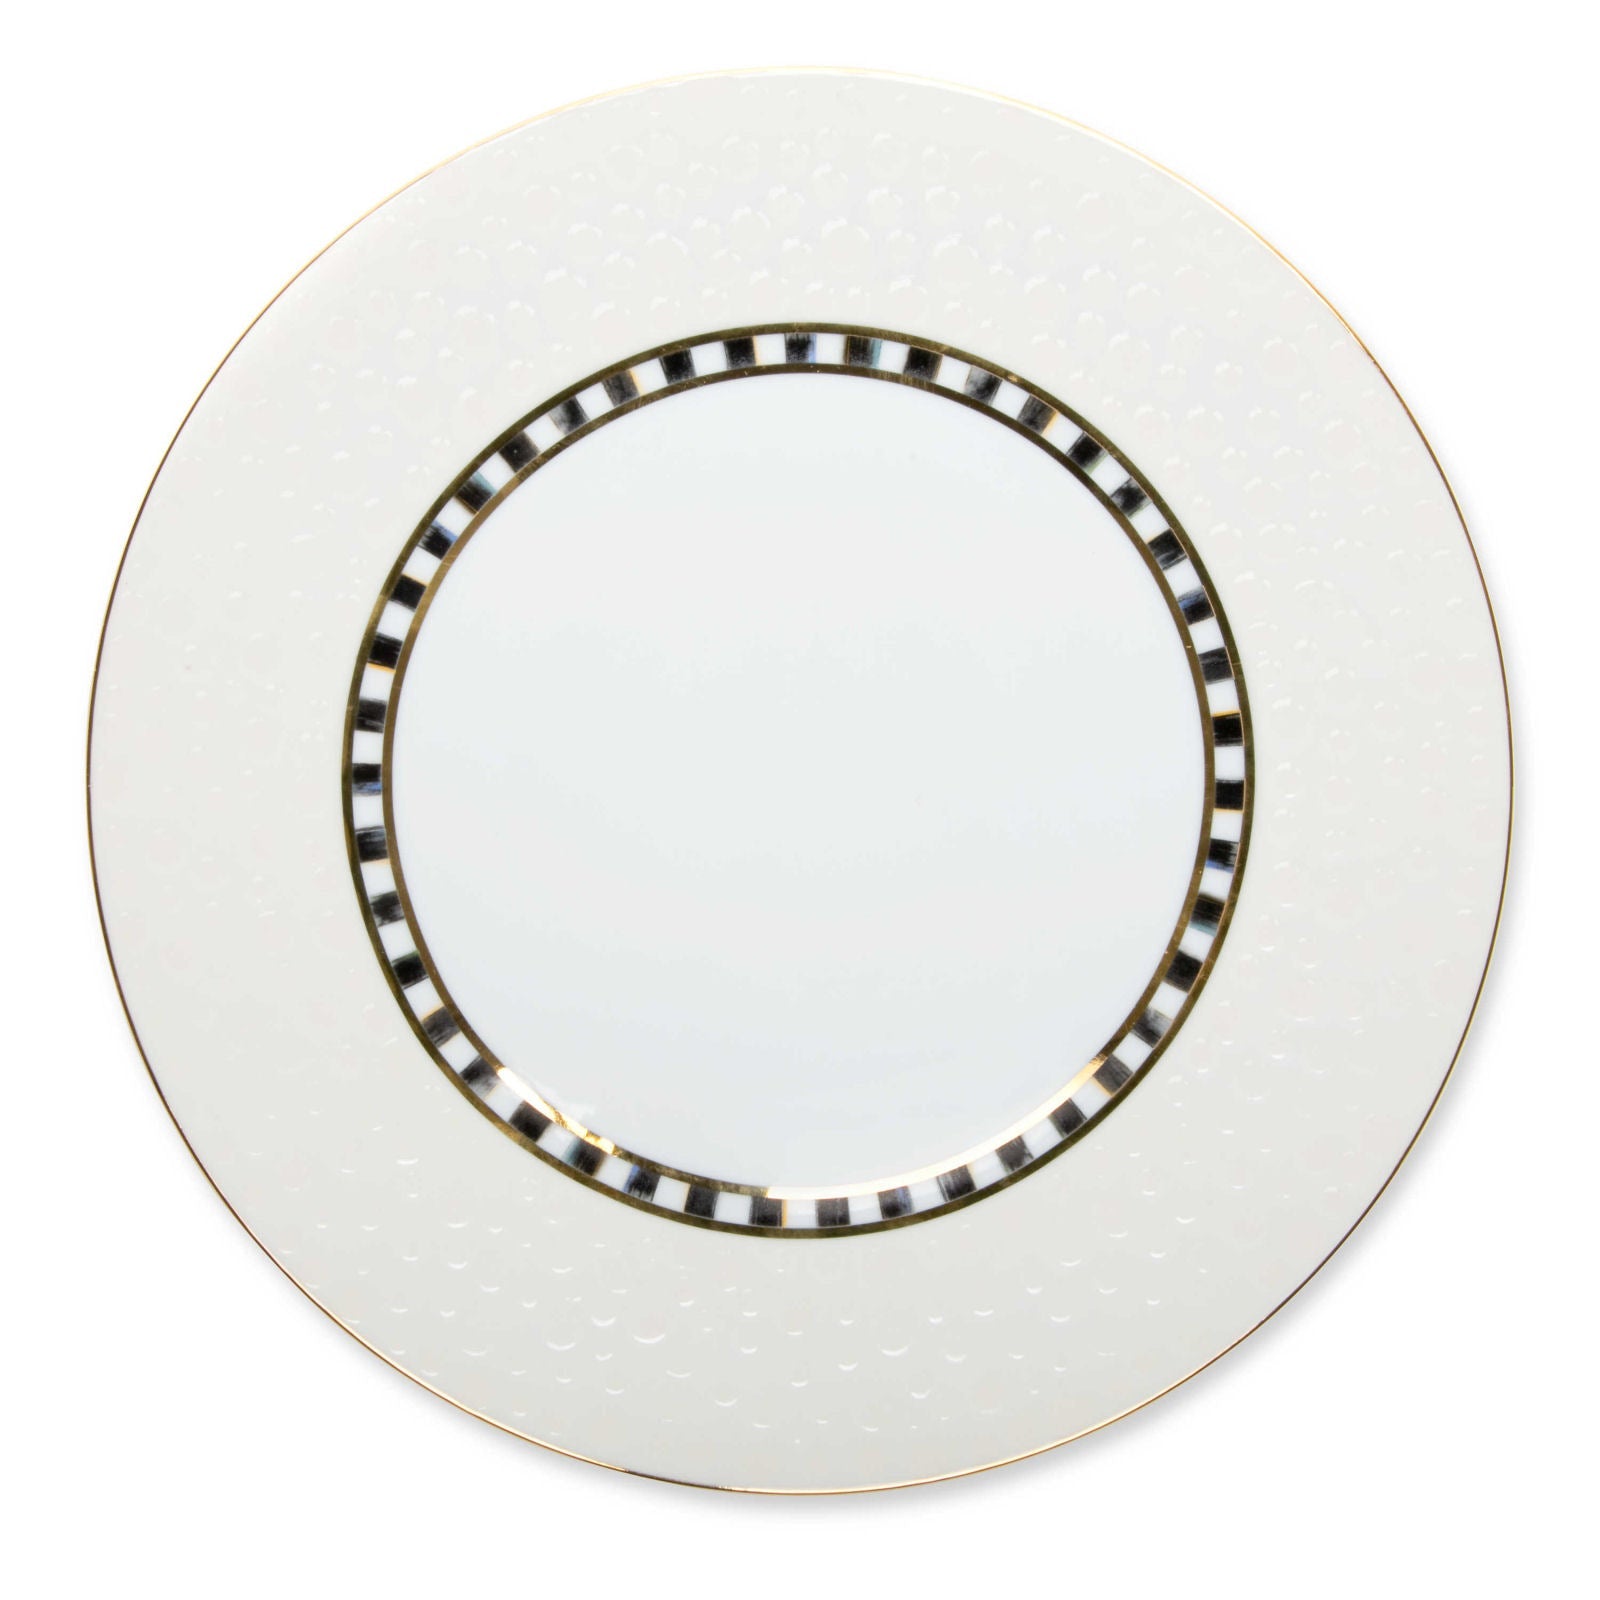 Luxury Porcelain SoHo Dinner Plate - Cloud - |VESIMI Design| Luxury and Rustic bathrooms online